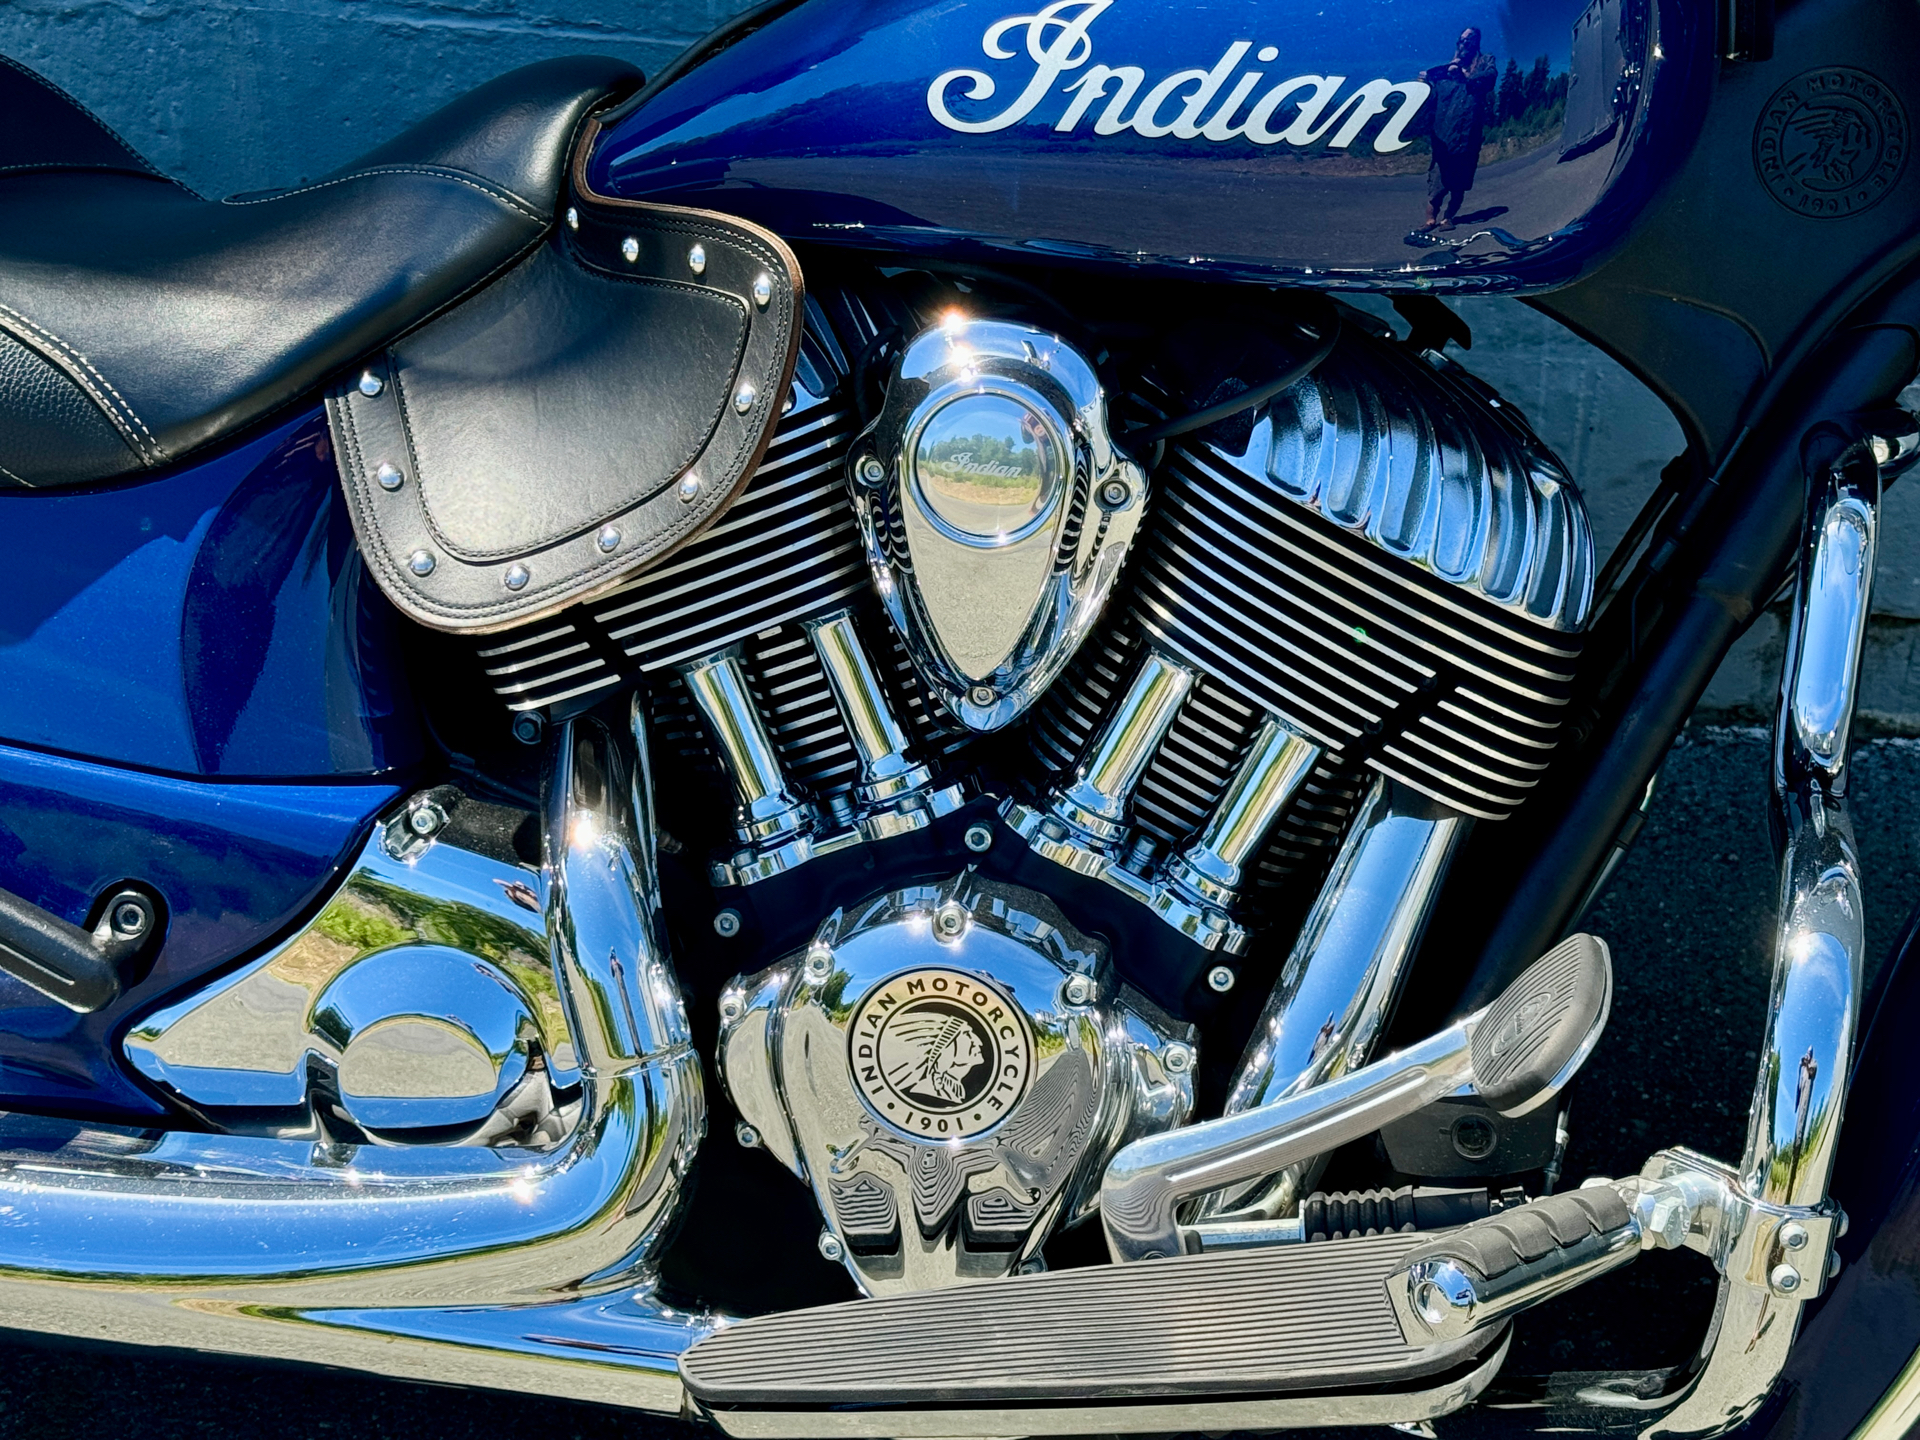 2014 Indian Motorcycle Chief® Classic in Foxboro, Massachusetts - Photo 26